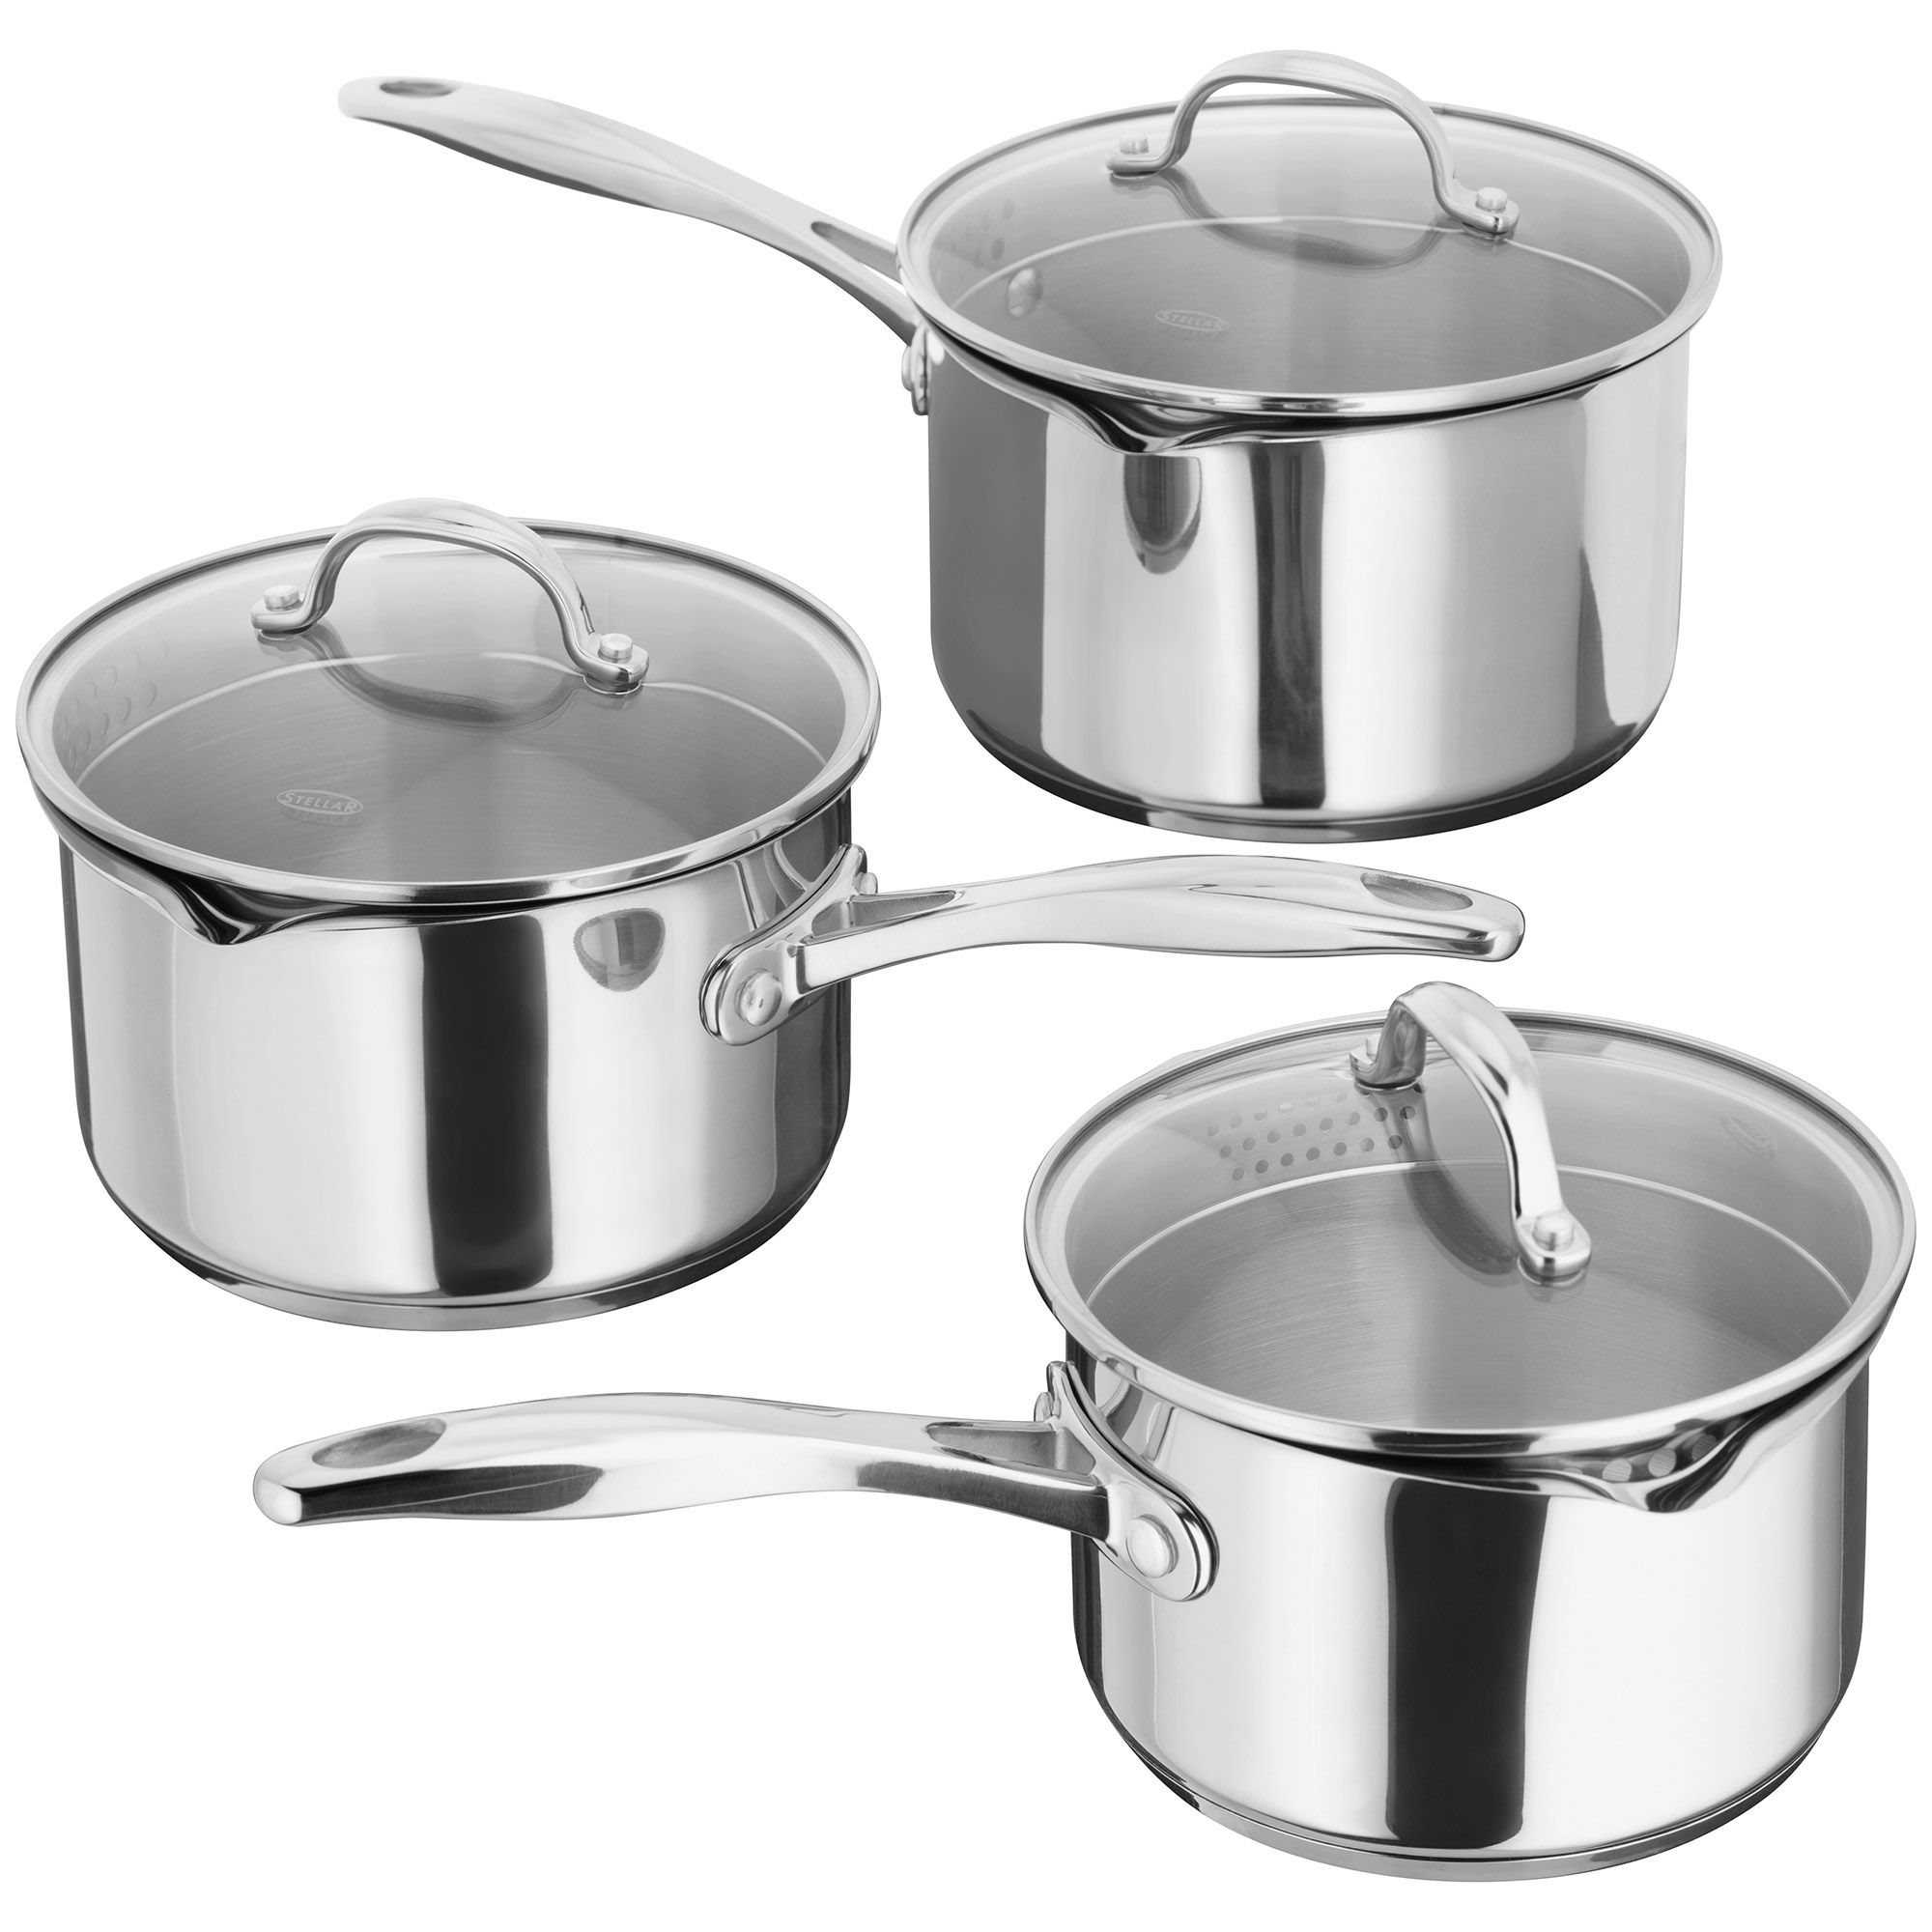 Stellar pots and pans